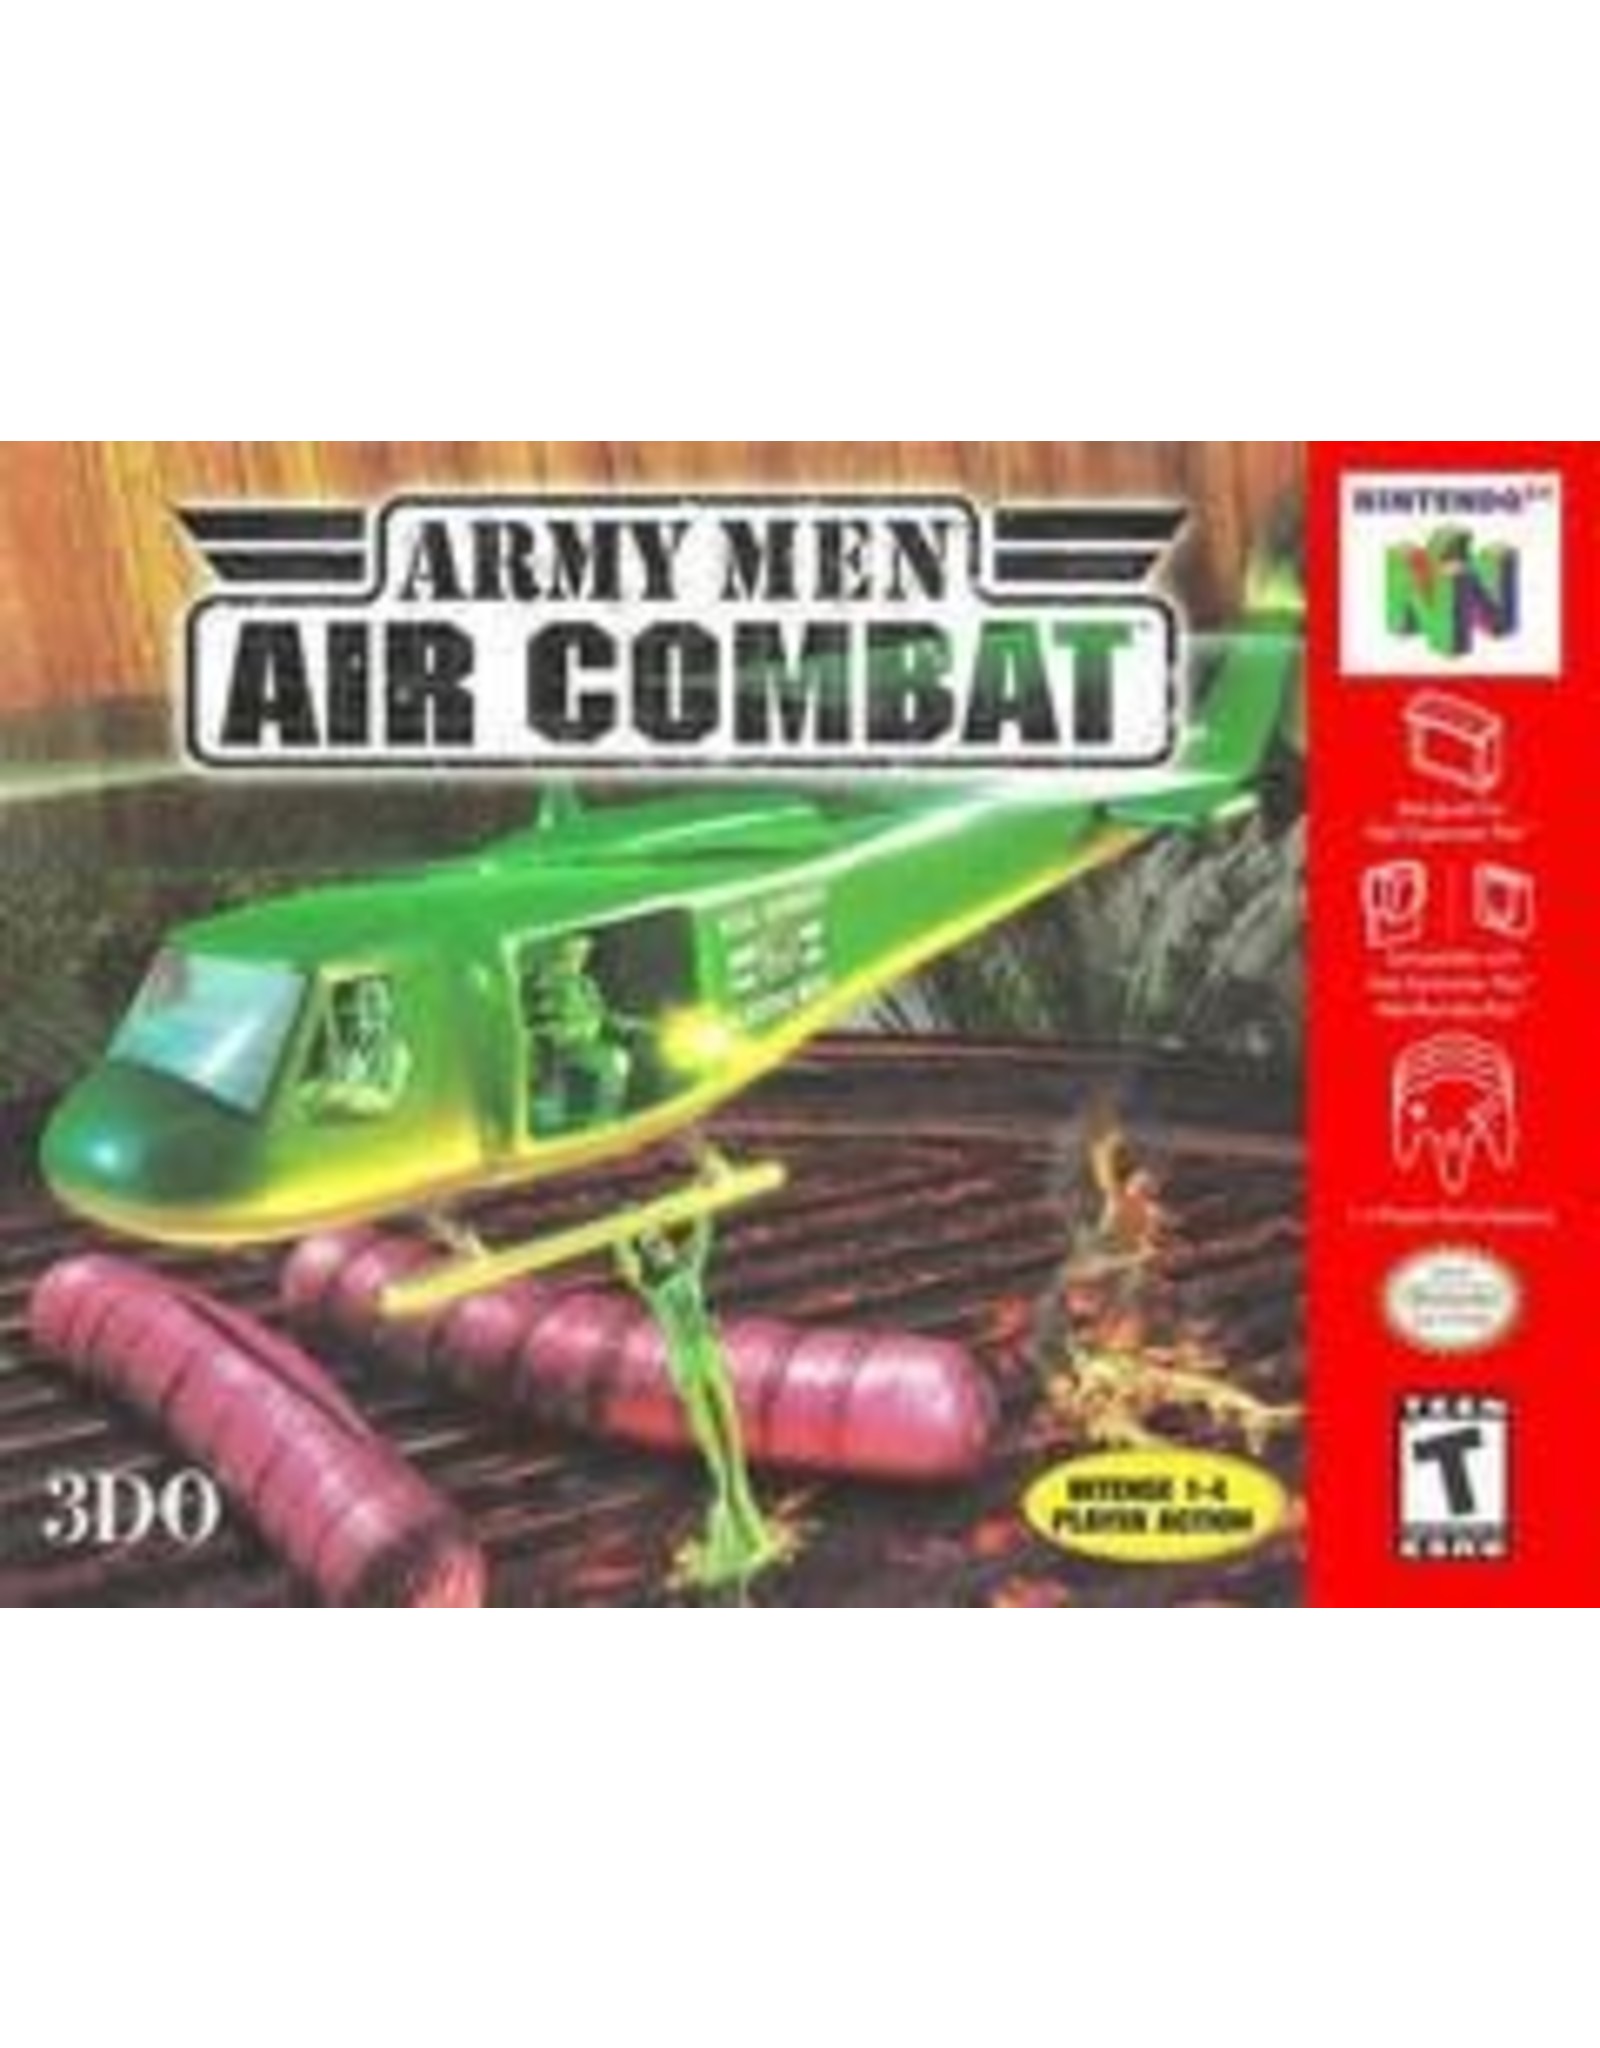 Nintendo 64 Army Men Air Combat (Boxed, No Manual)